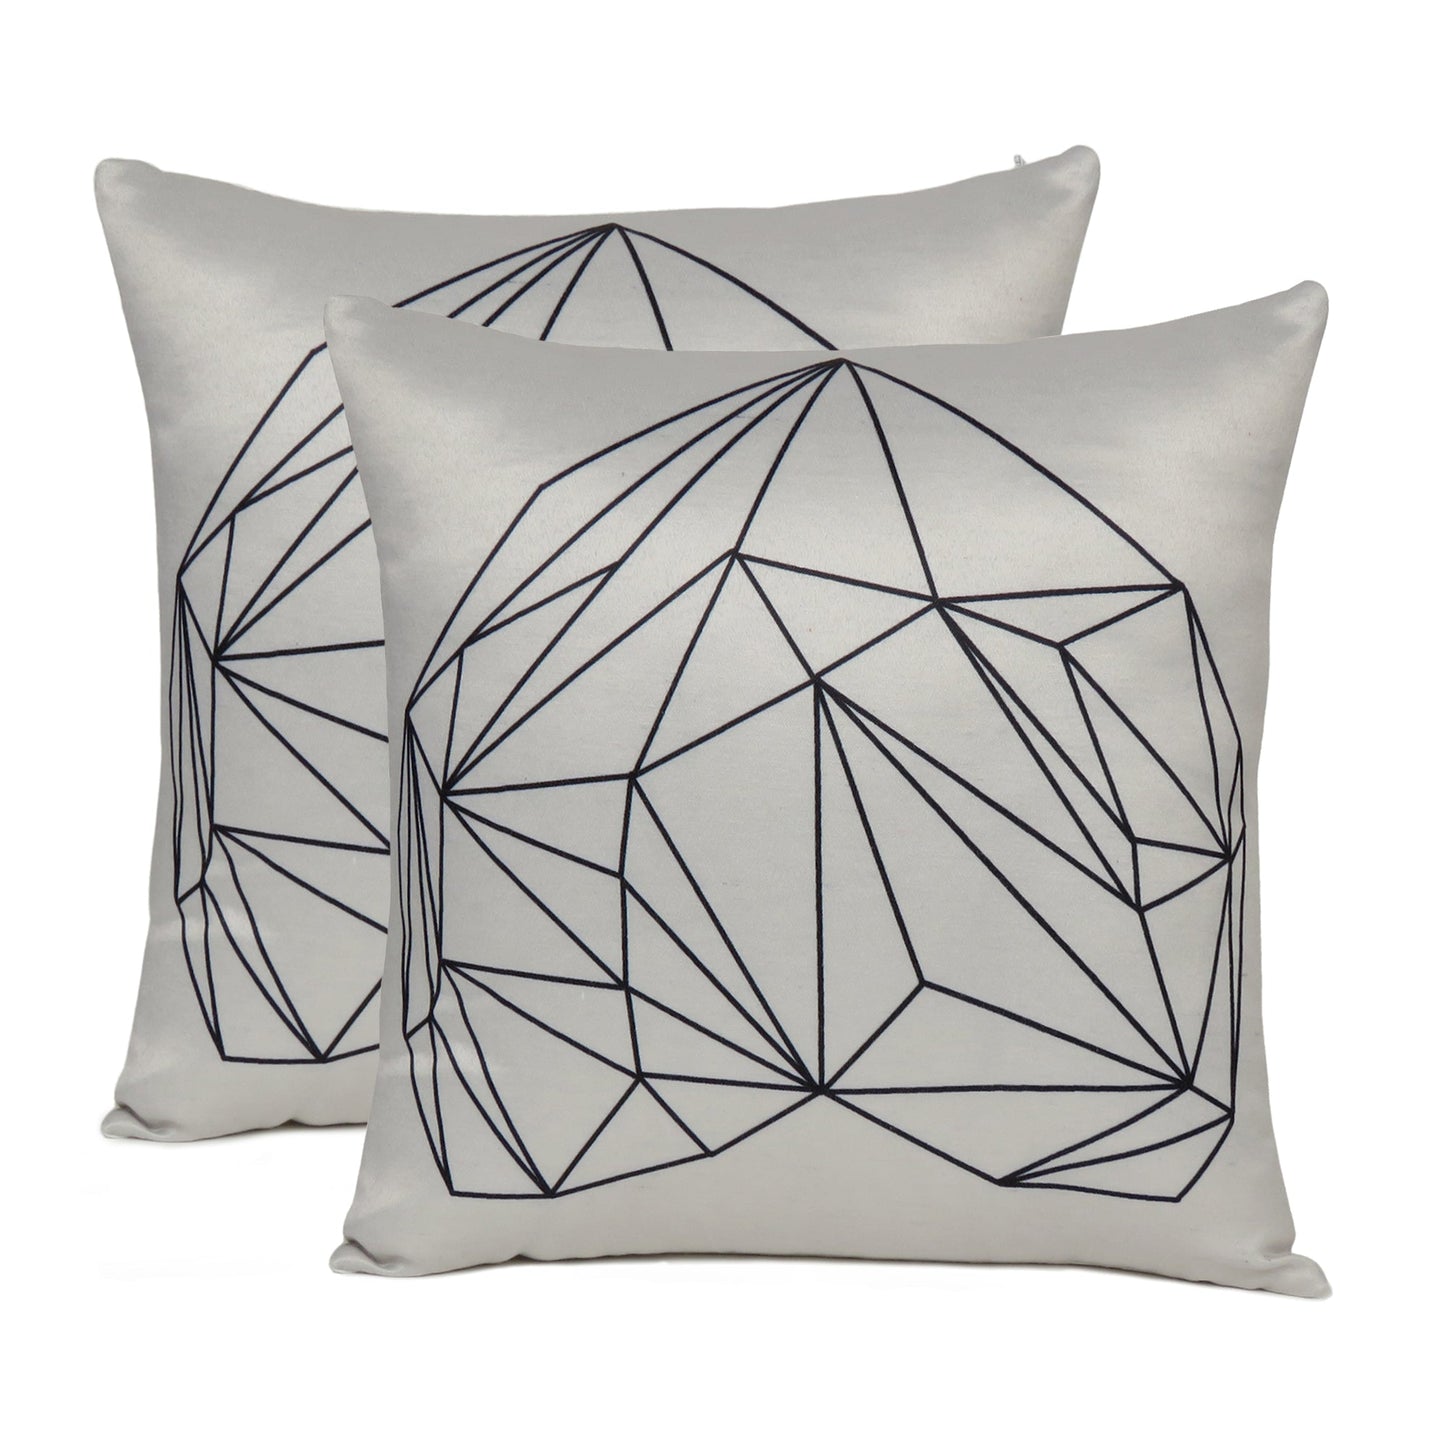 White Geometric Printed Cushion Cover in Set of 2